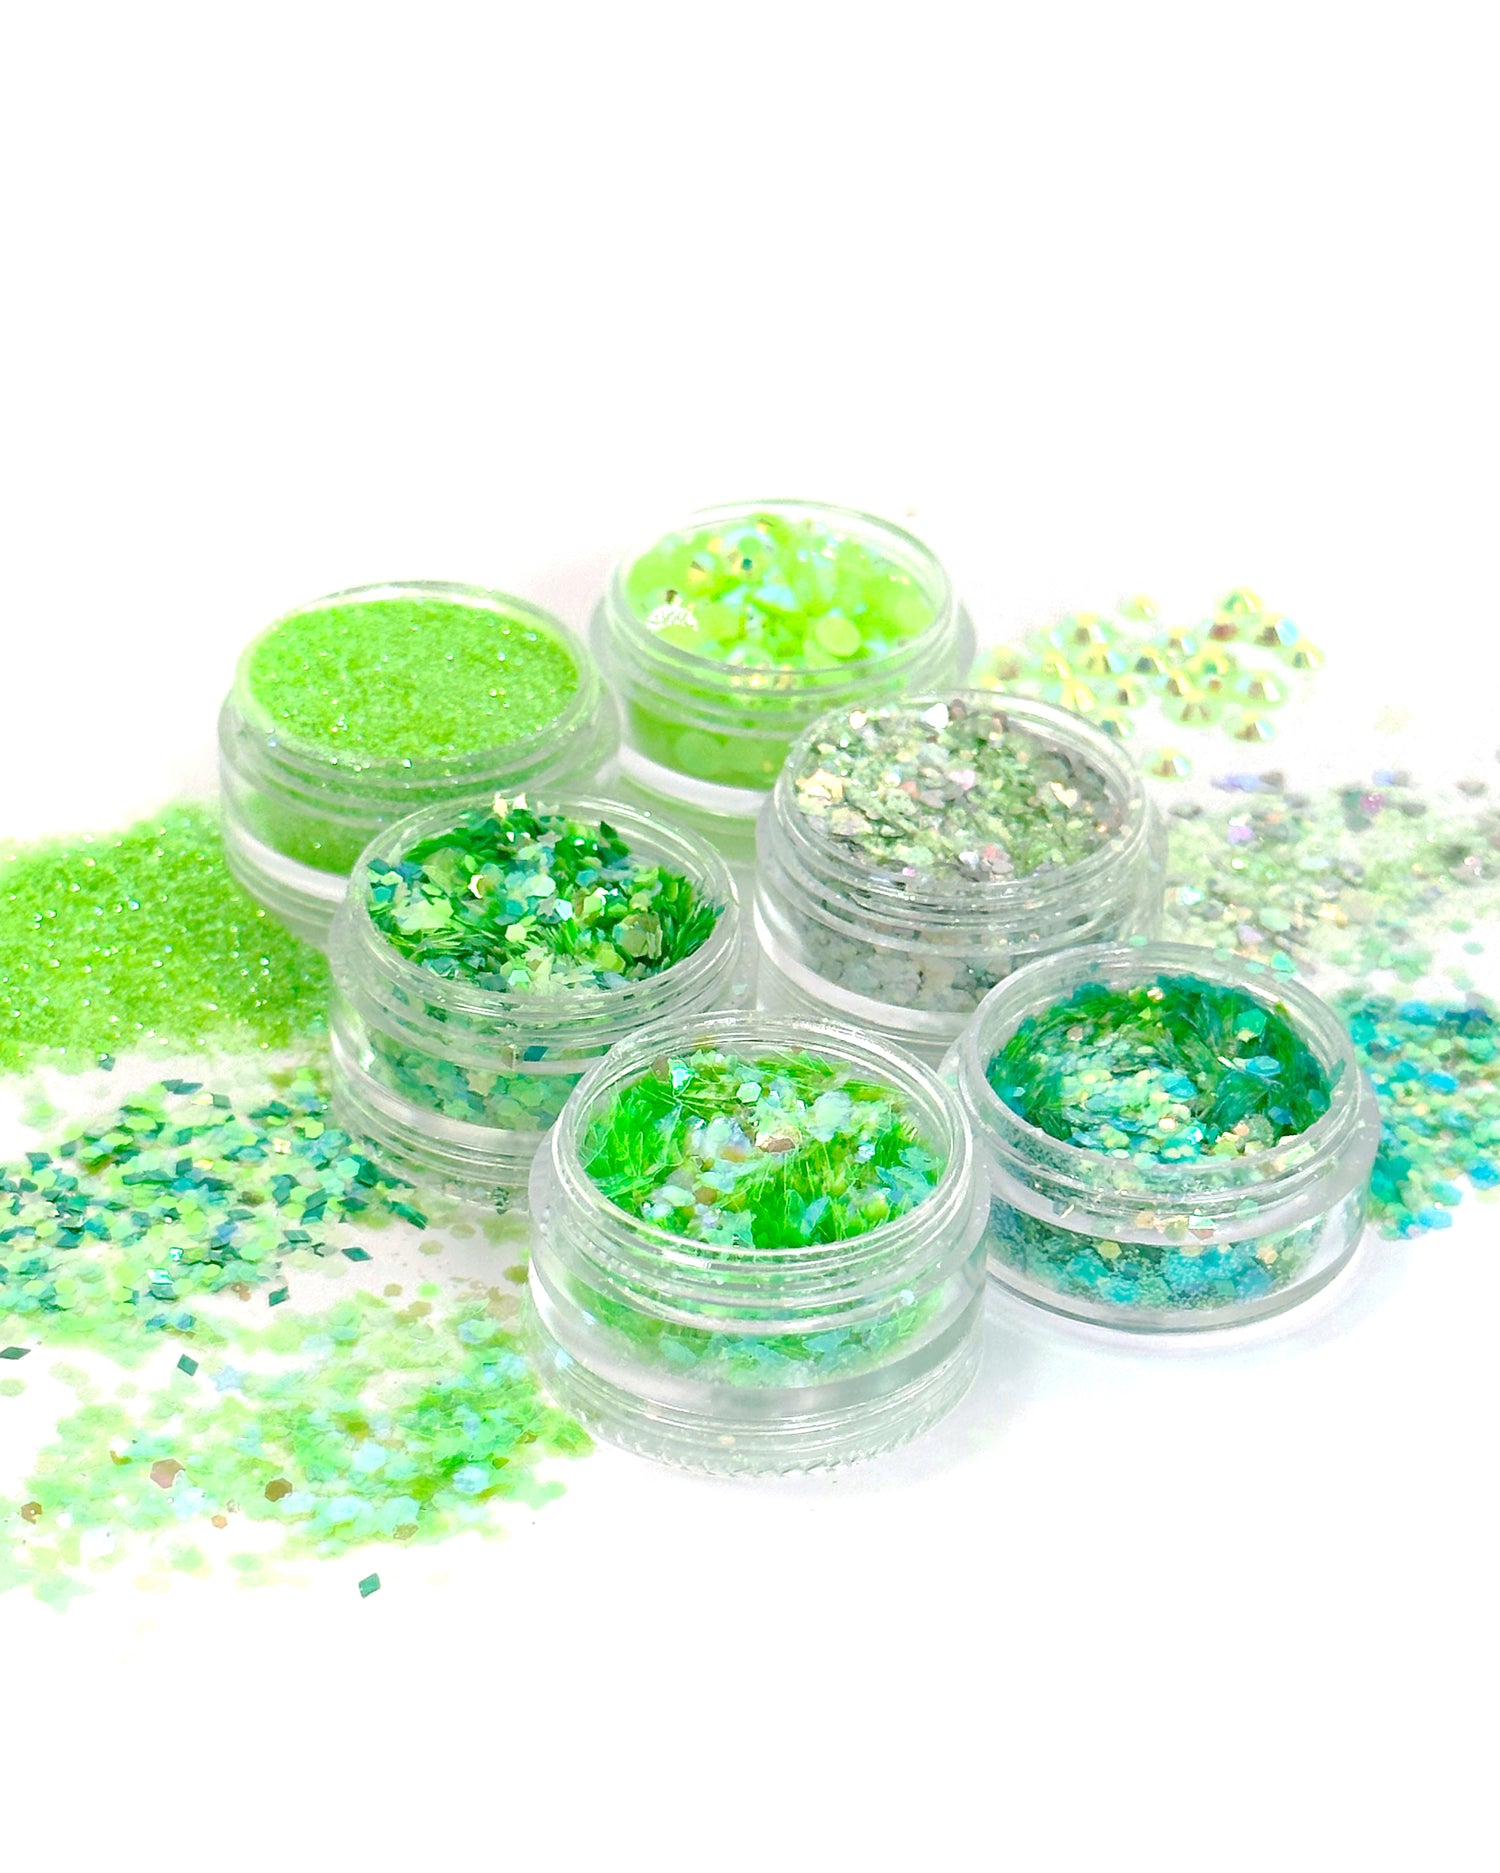 Firefly - Iridescent Neon Green Glitter and Jewel Stack - Lunautics Glitter and Jewel Stack